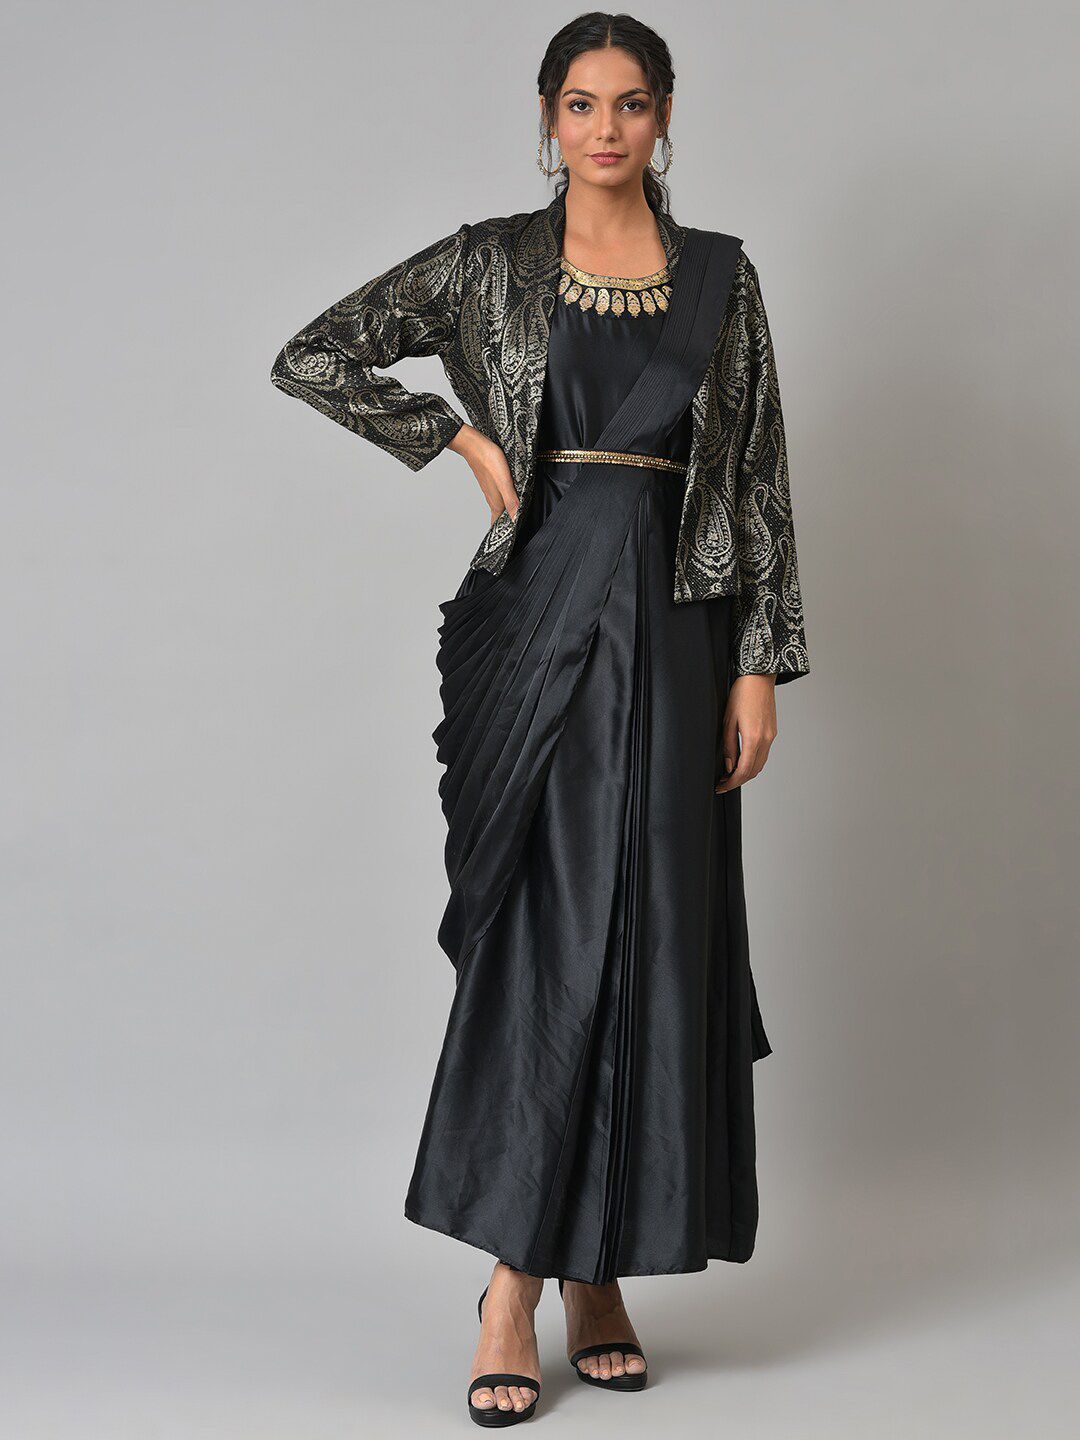 WISHFUL Black Satin Ethnic Maxi Dress Price in India